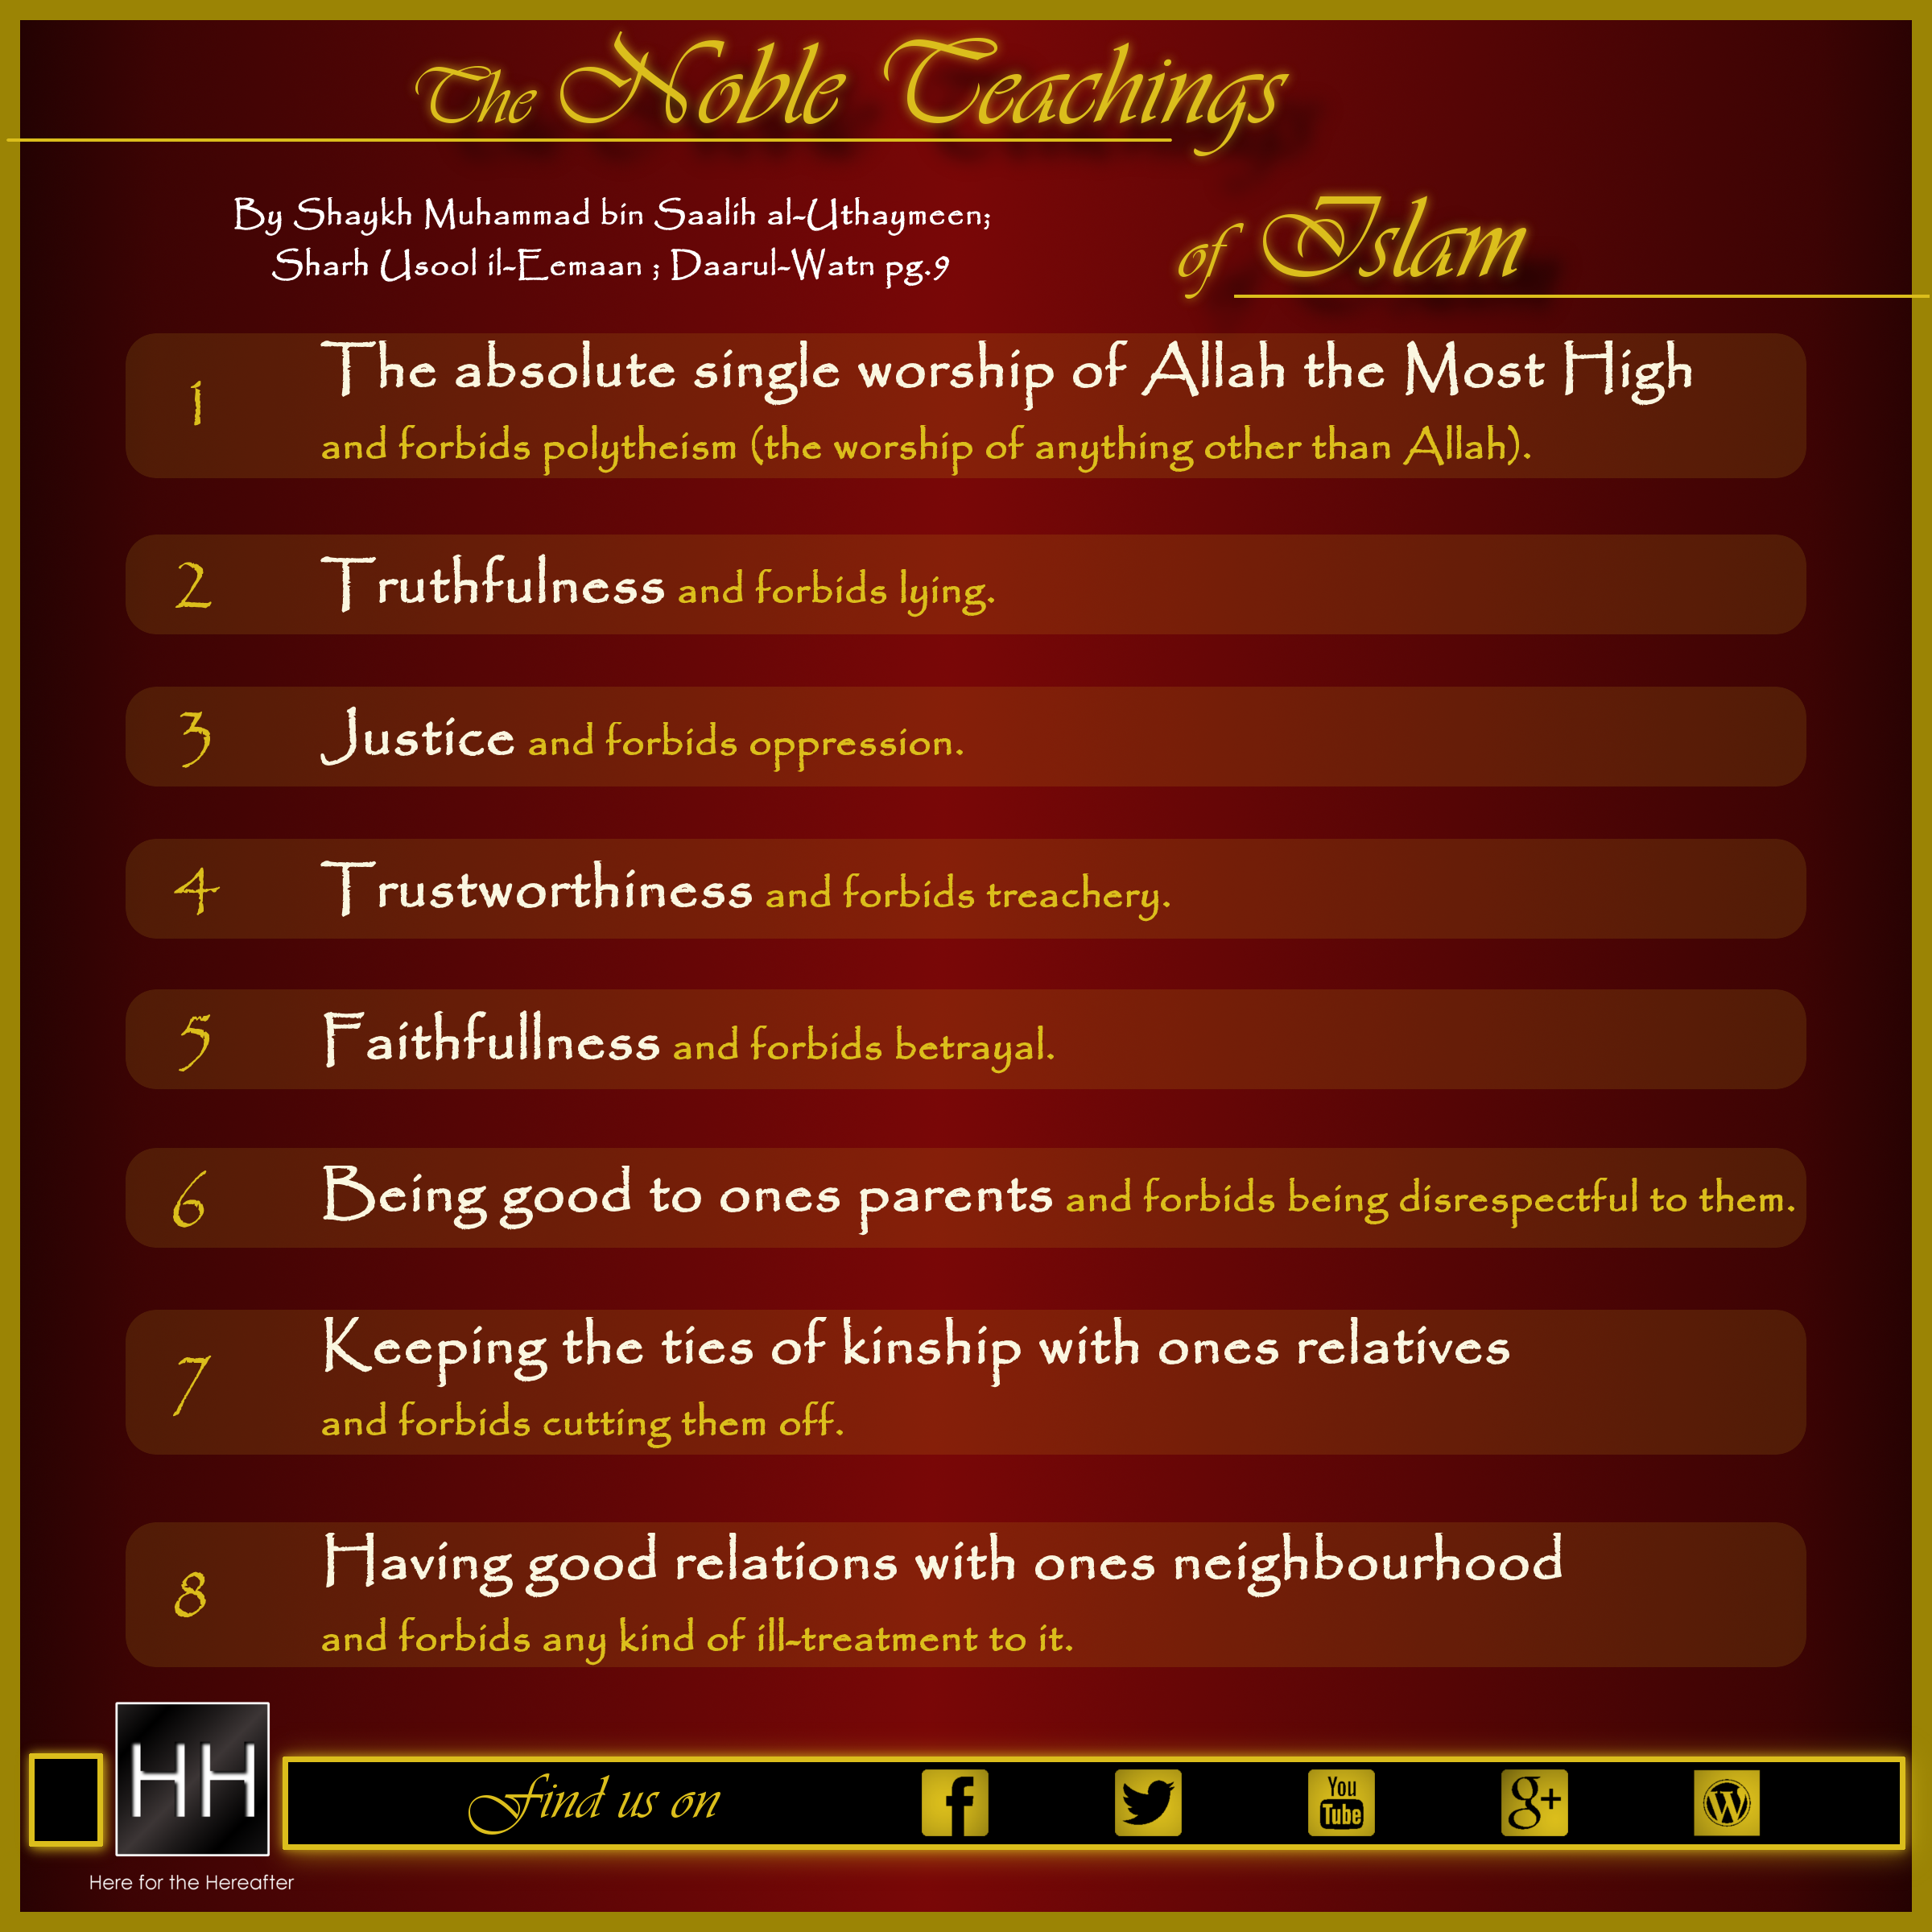 The Noble Teachings of Islam